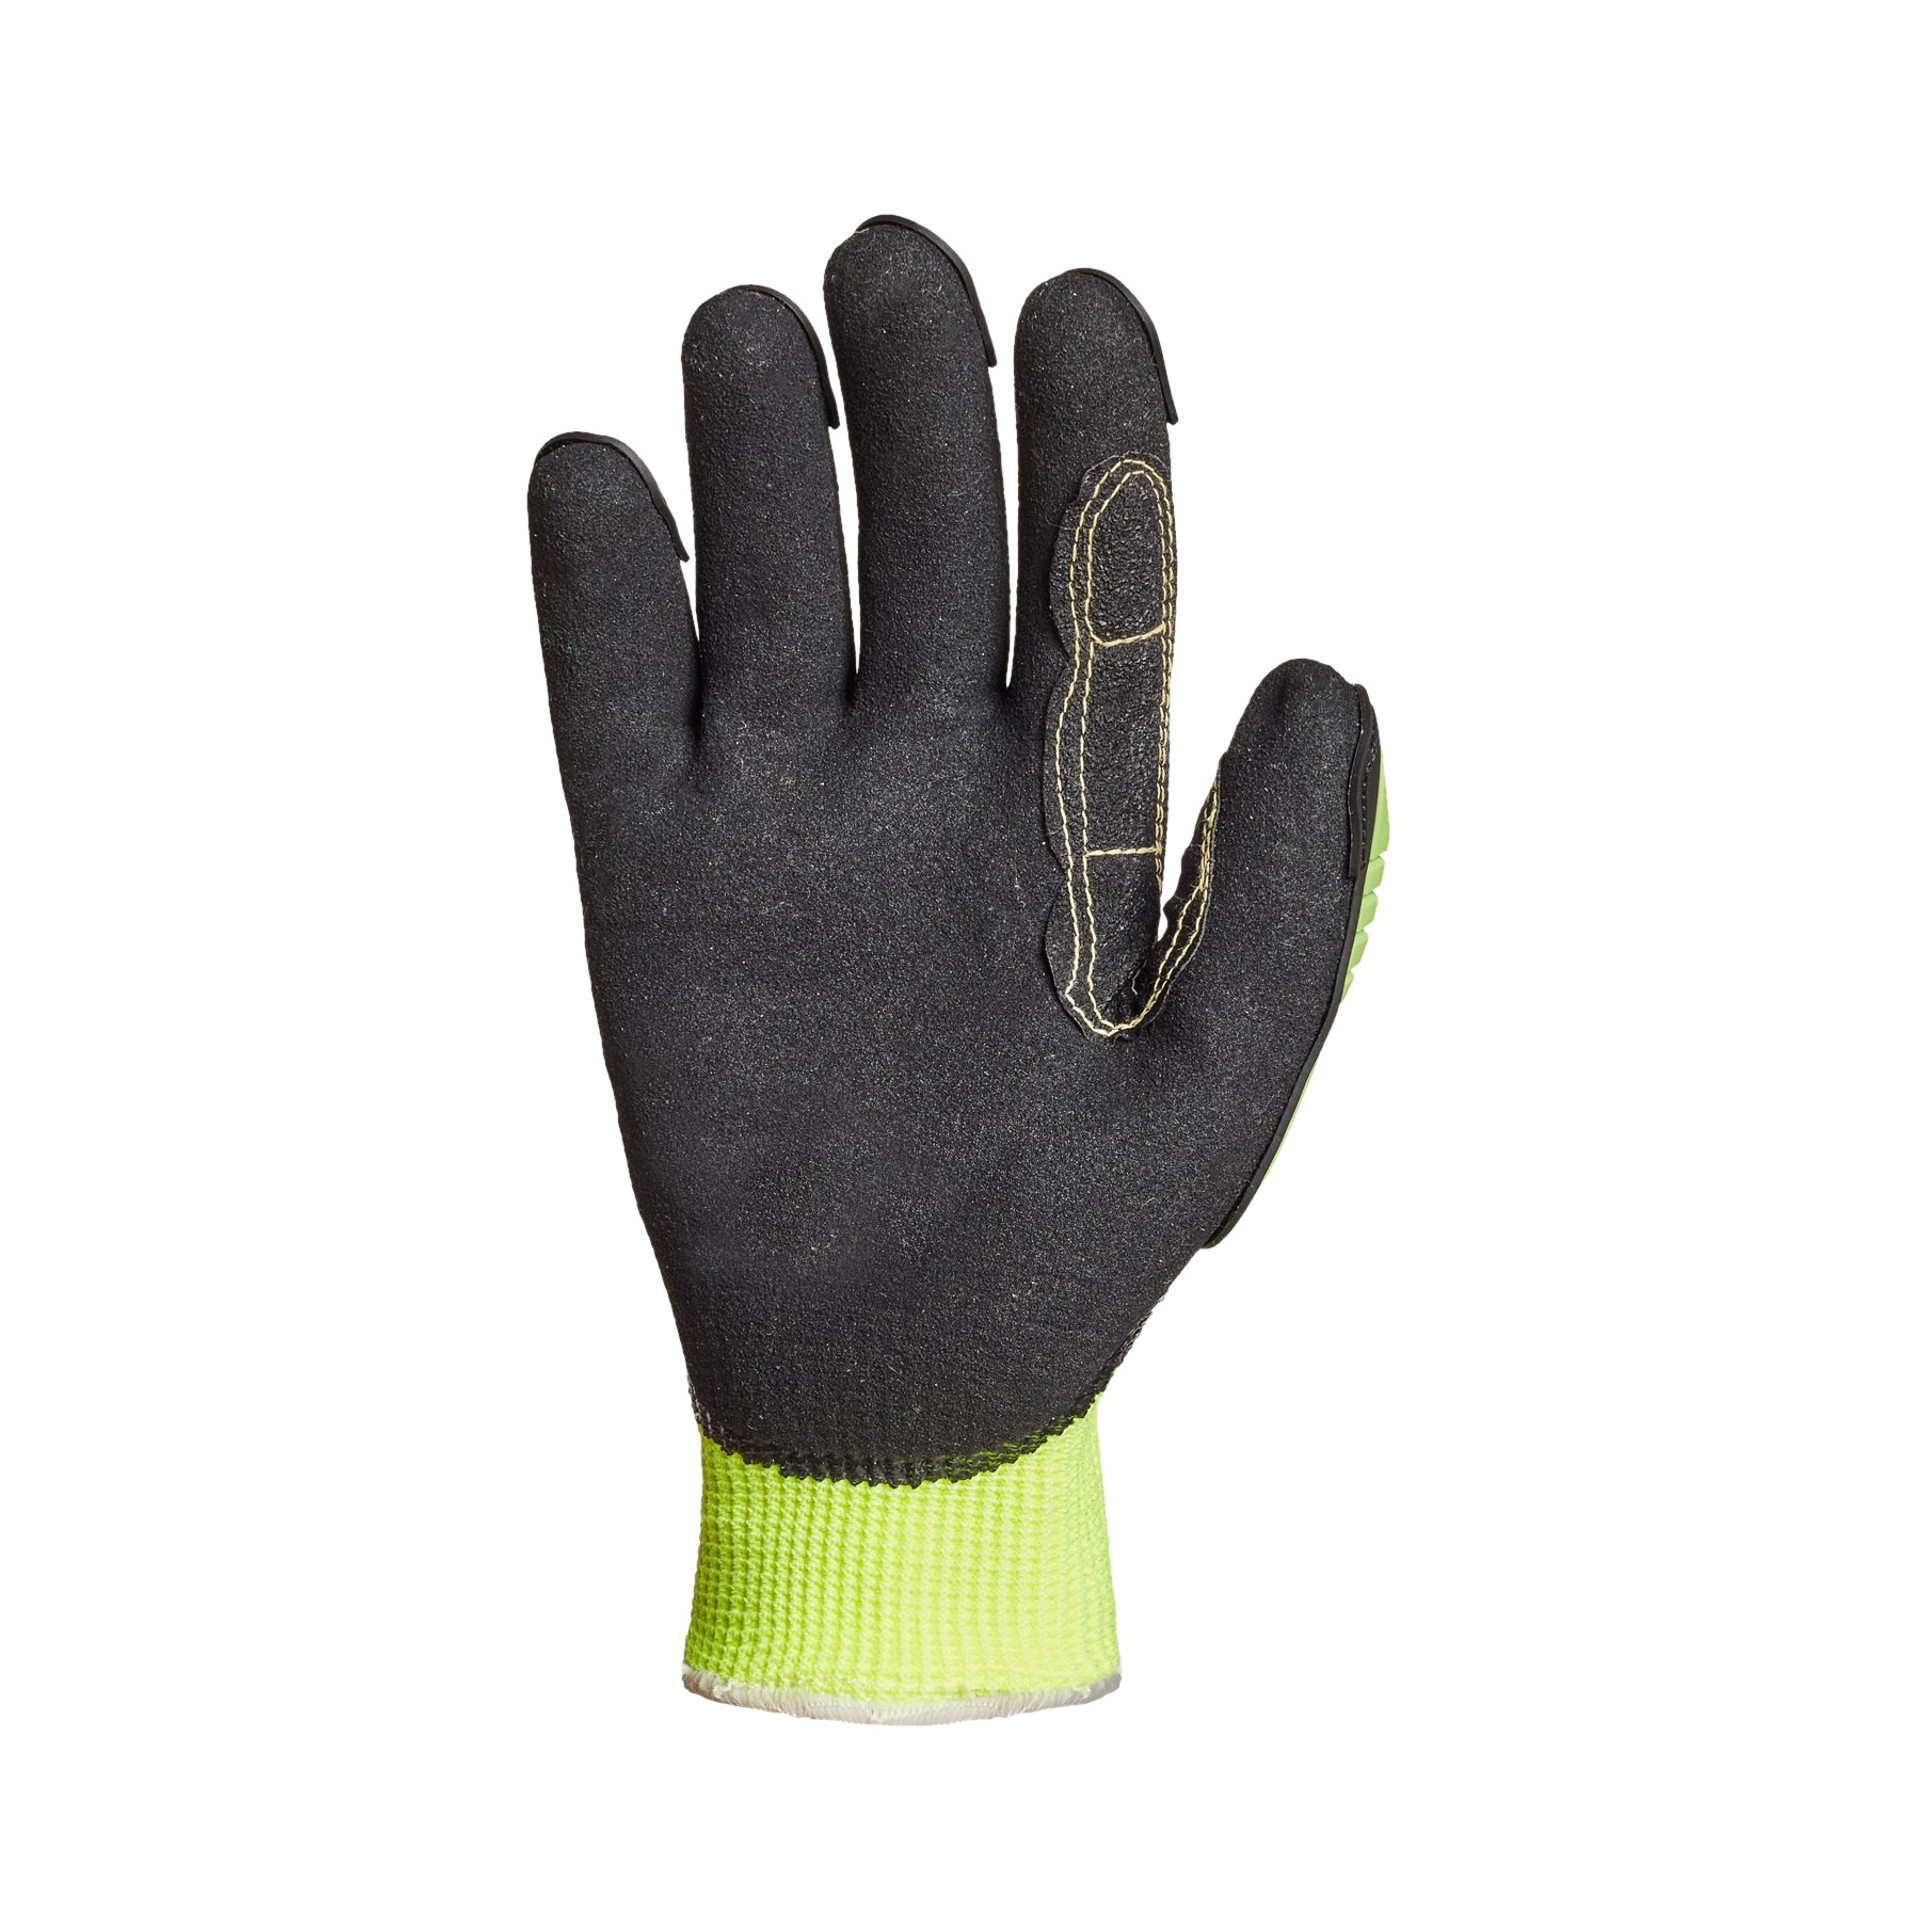 TenActiv™ Cut & Impact Resistant Hi-Viz Hi-Performance Knit Gloves With ...